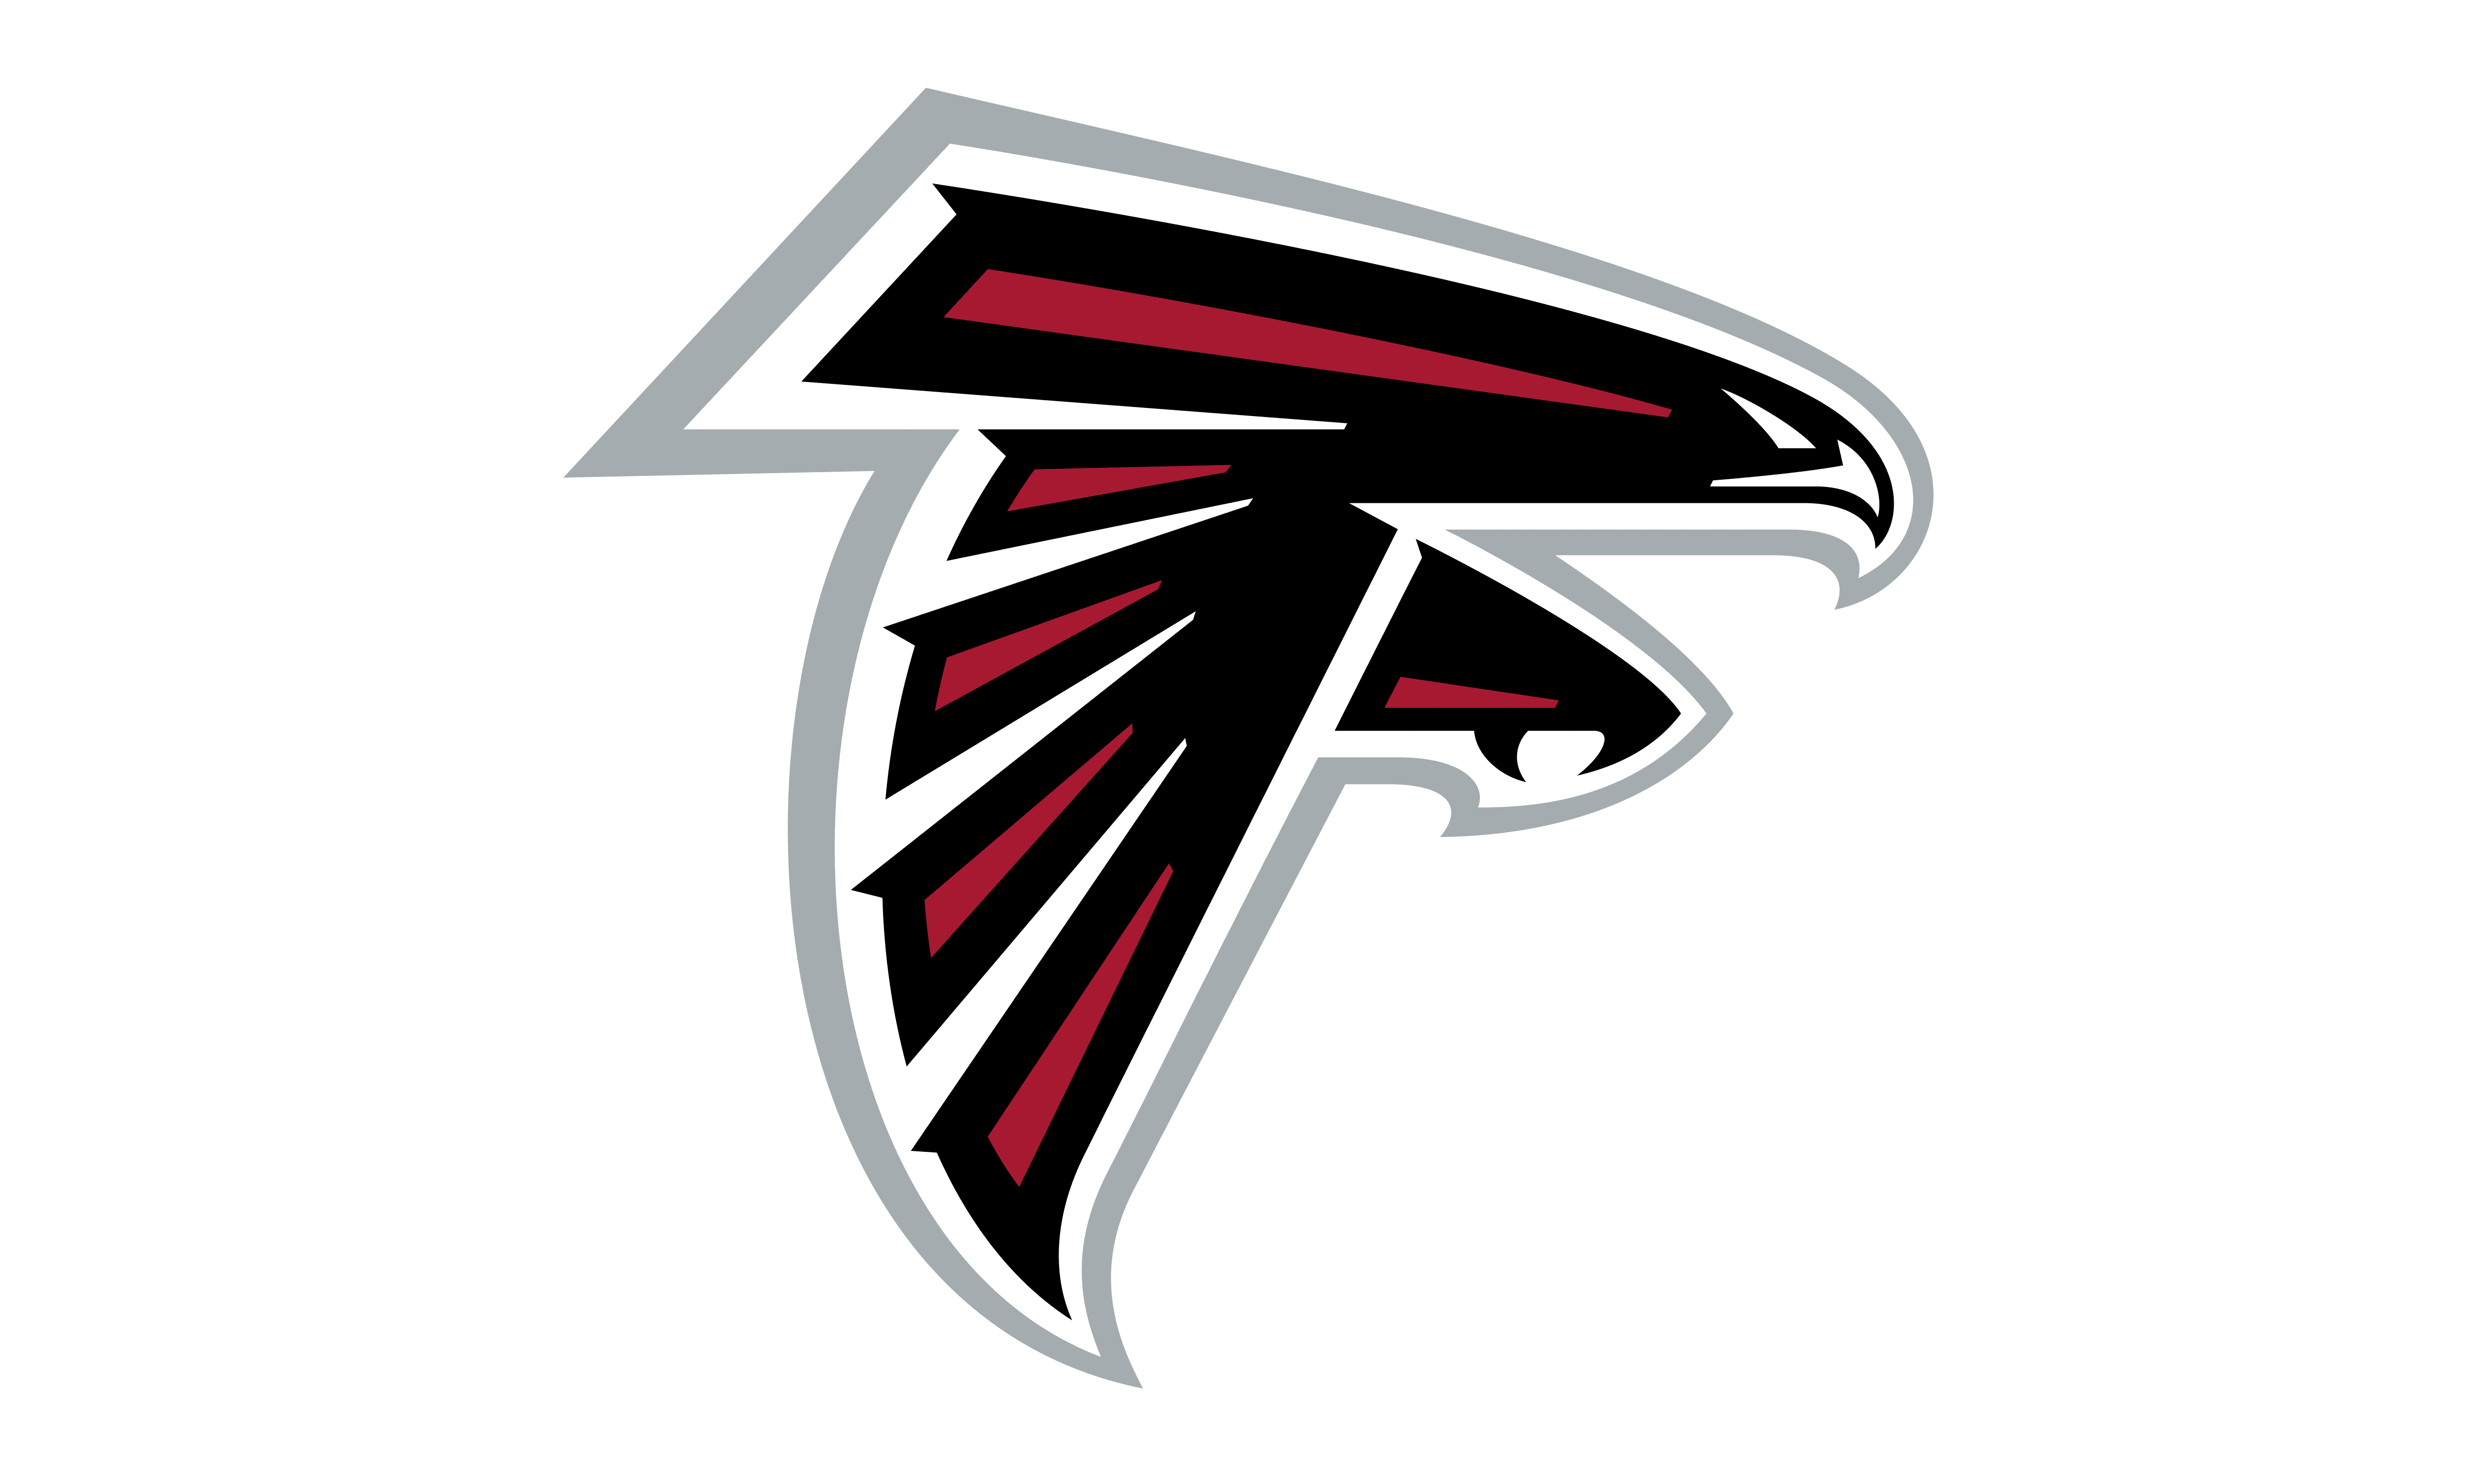 Leadoff: Atlanta's Super Bowl gets a second logo from NFL